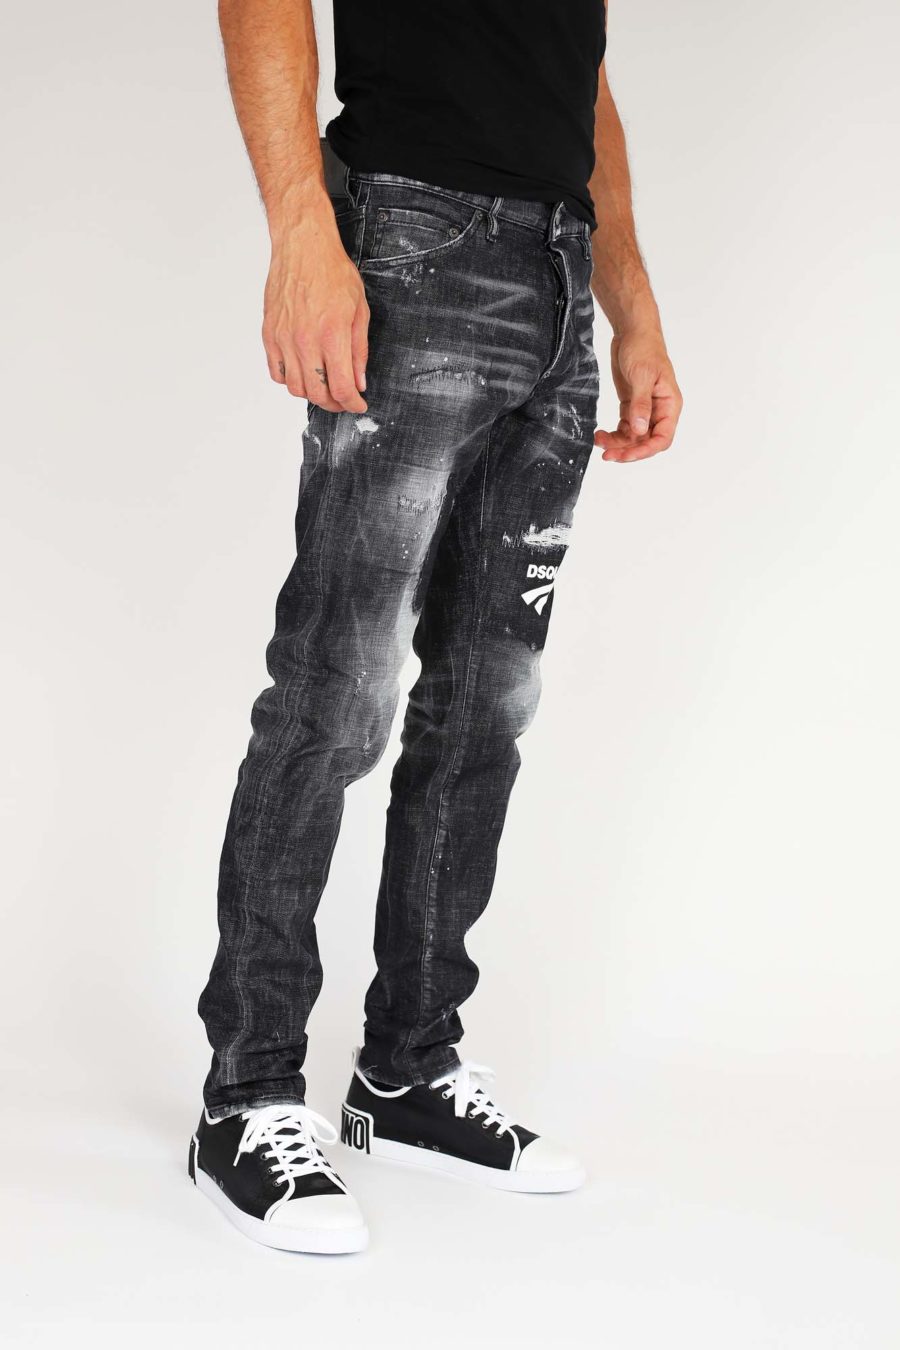 Jeans noirs avec logo - IMG 9884